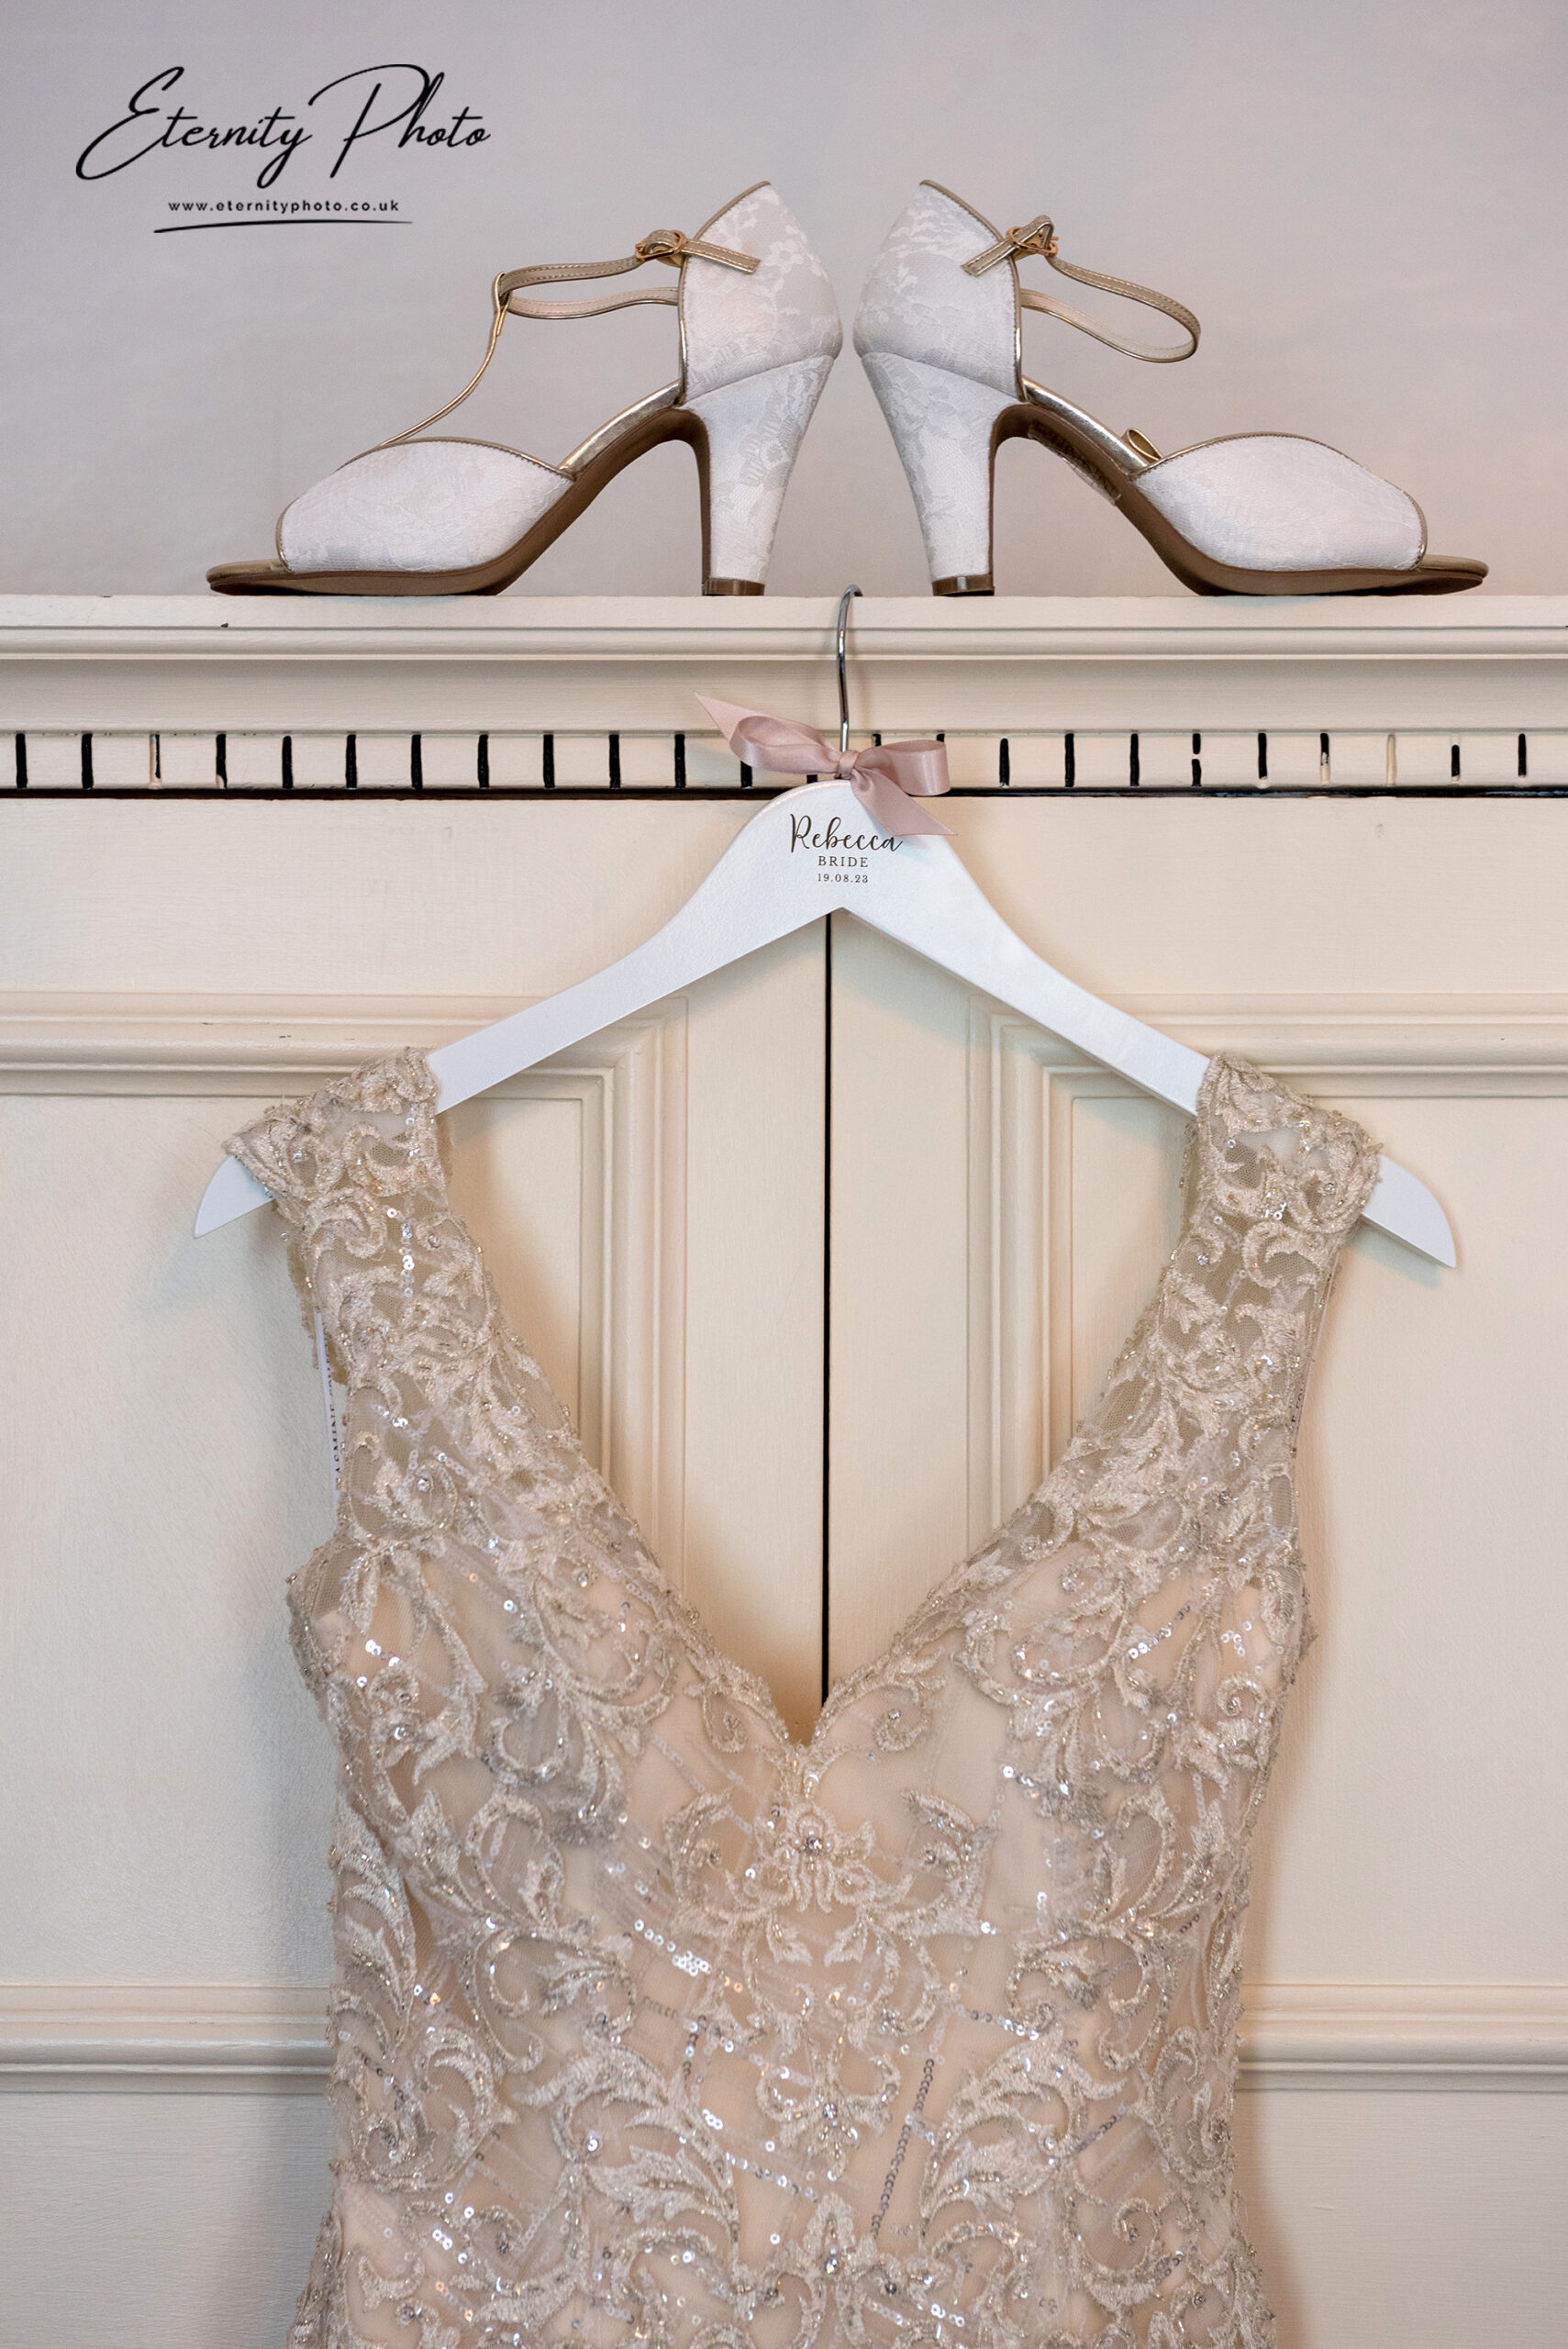 Elegant bridal shoes and wedding dress detail.